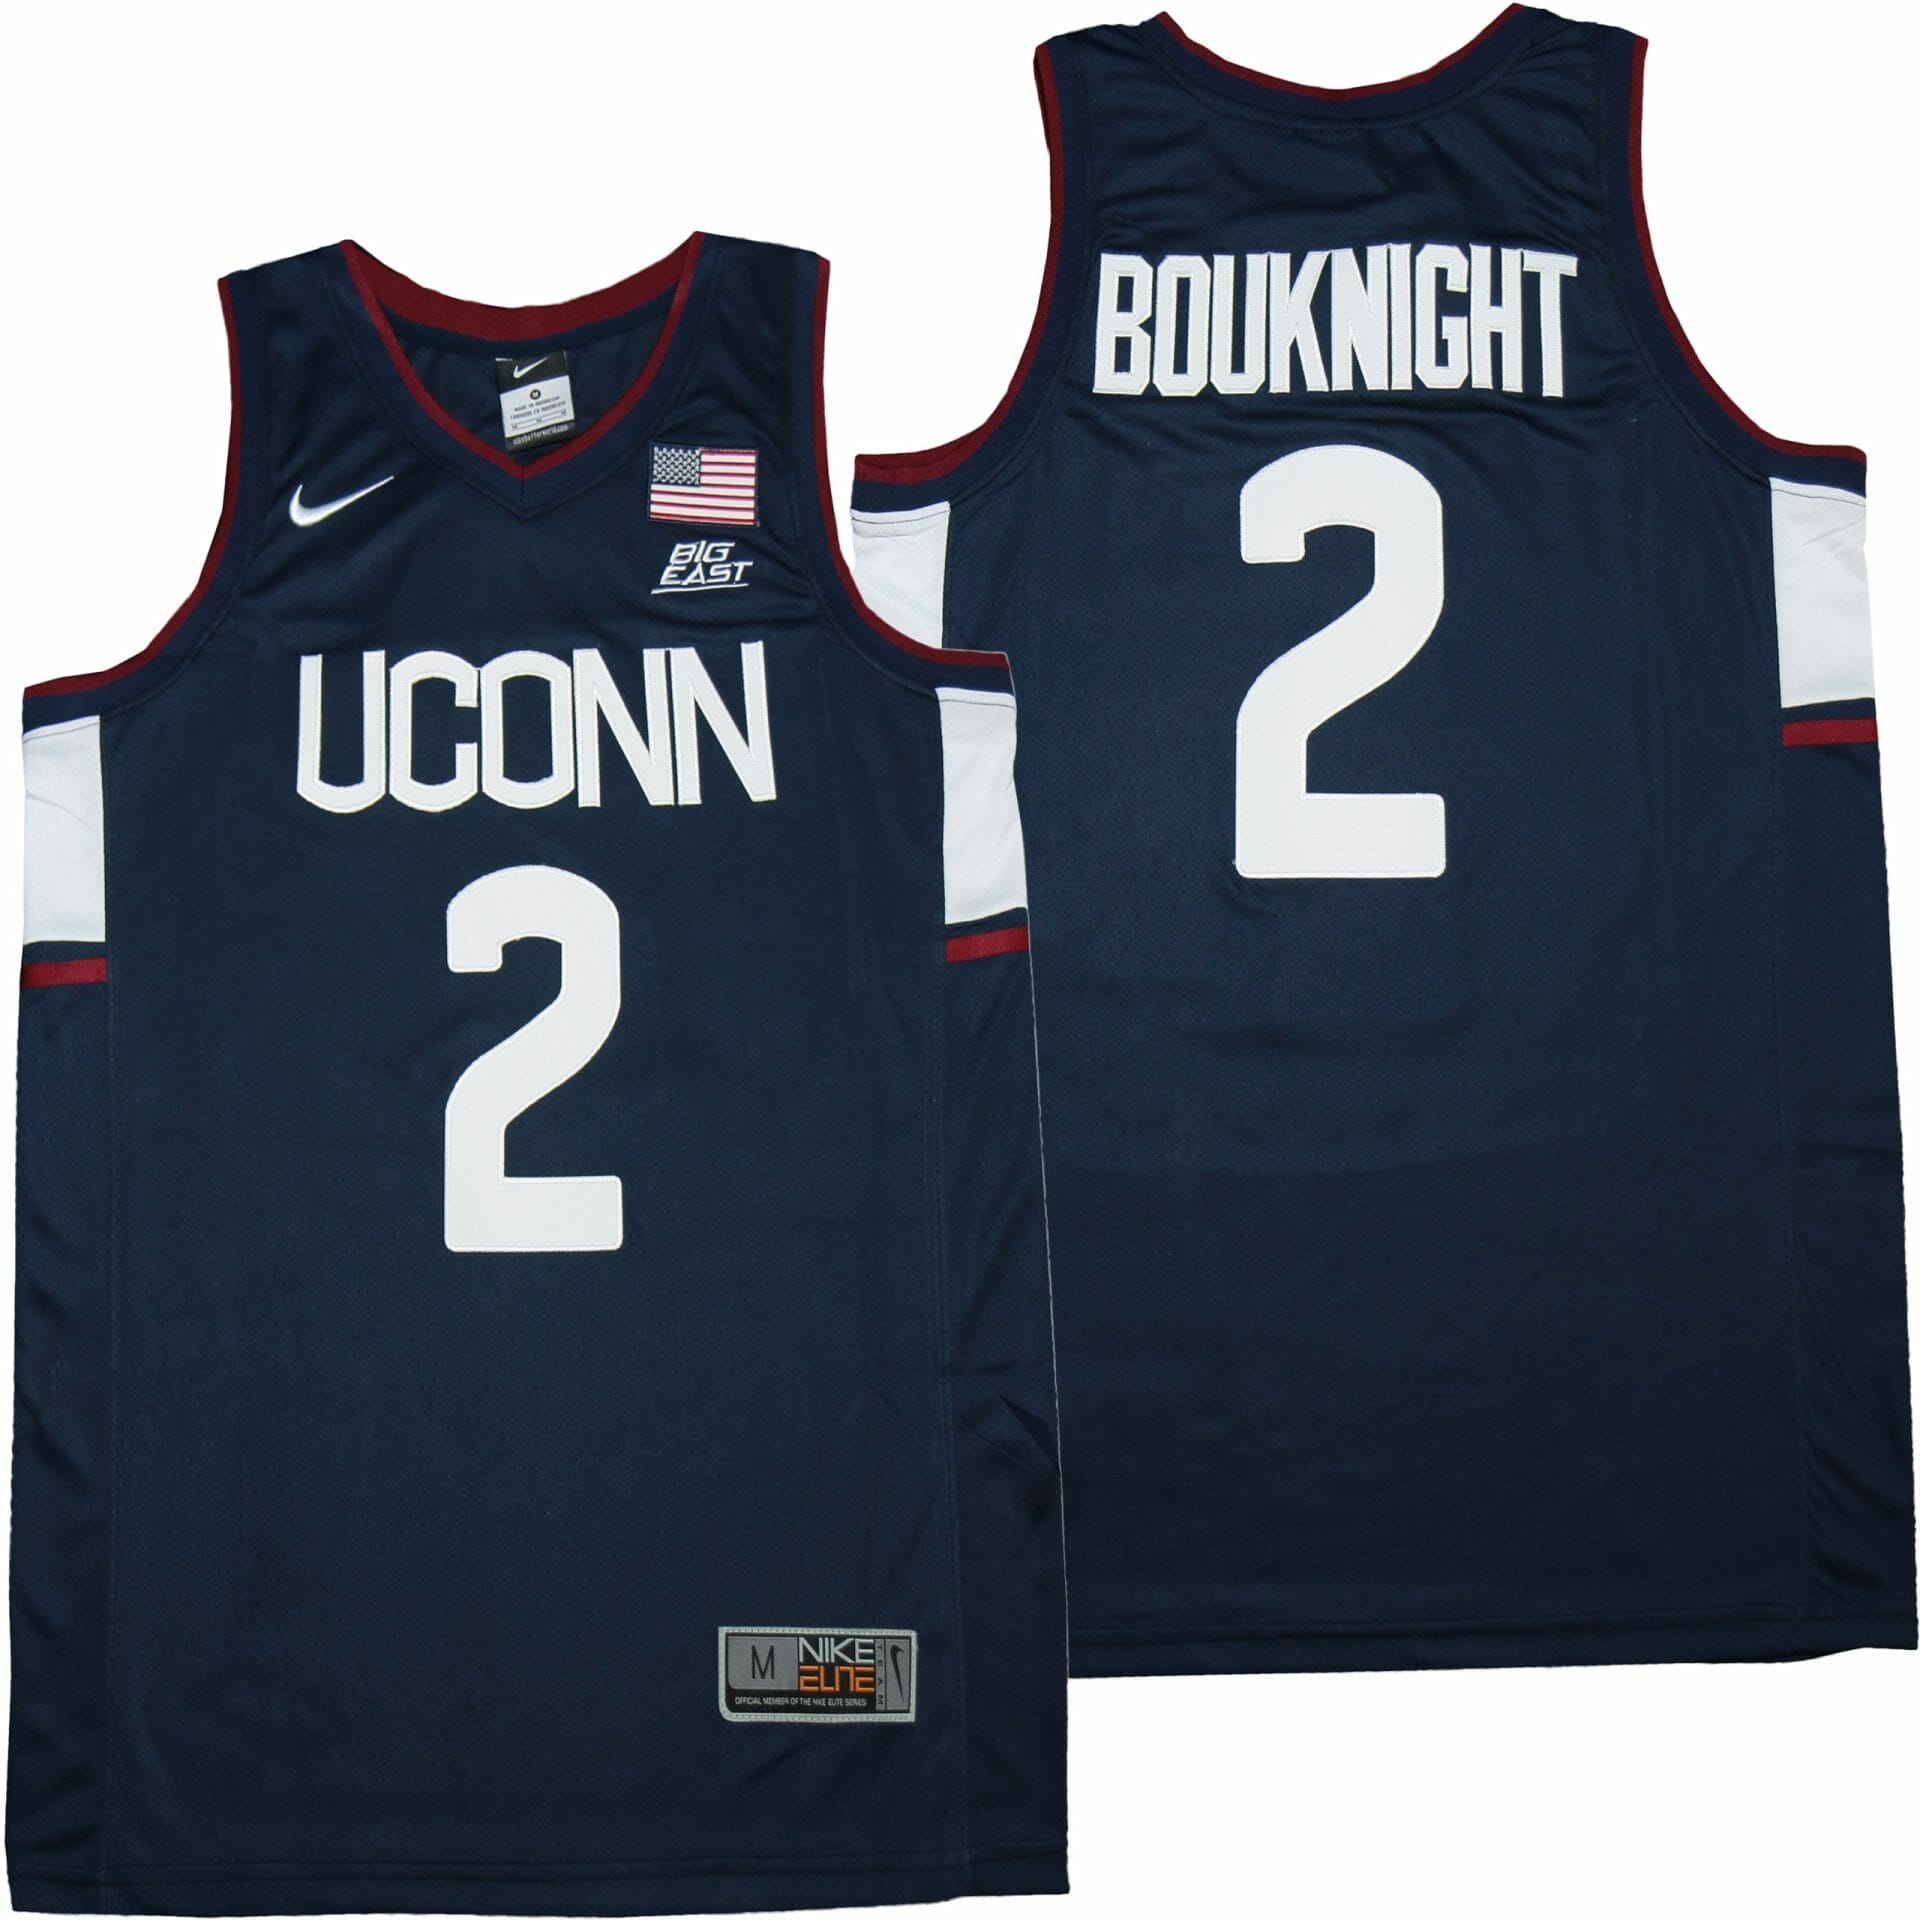 Uconn Huskies #2 James Bouknight NCAA College Basketball Jersey